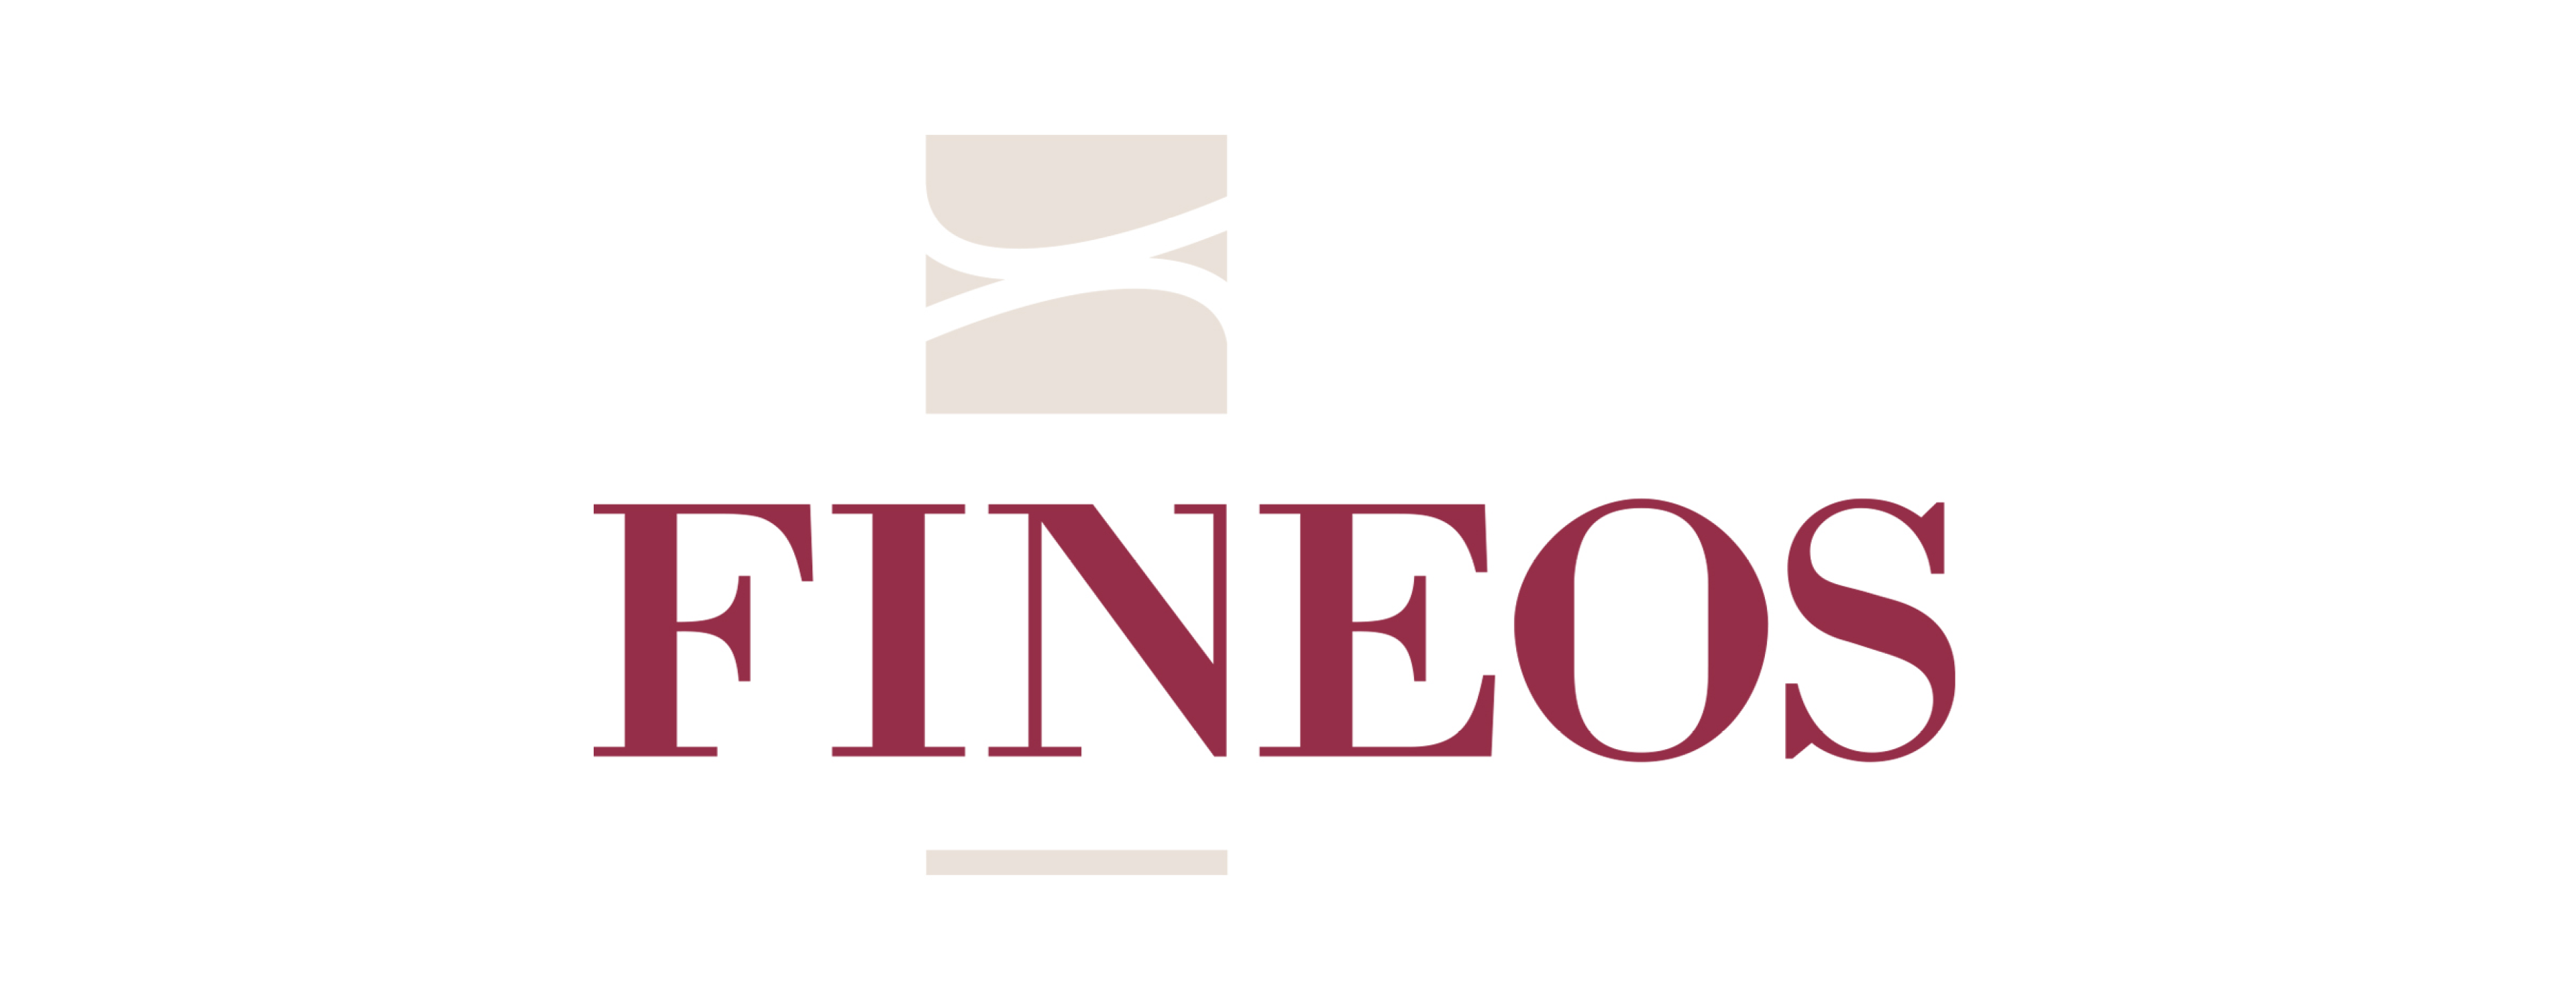 FINEOS logo